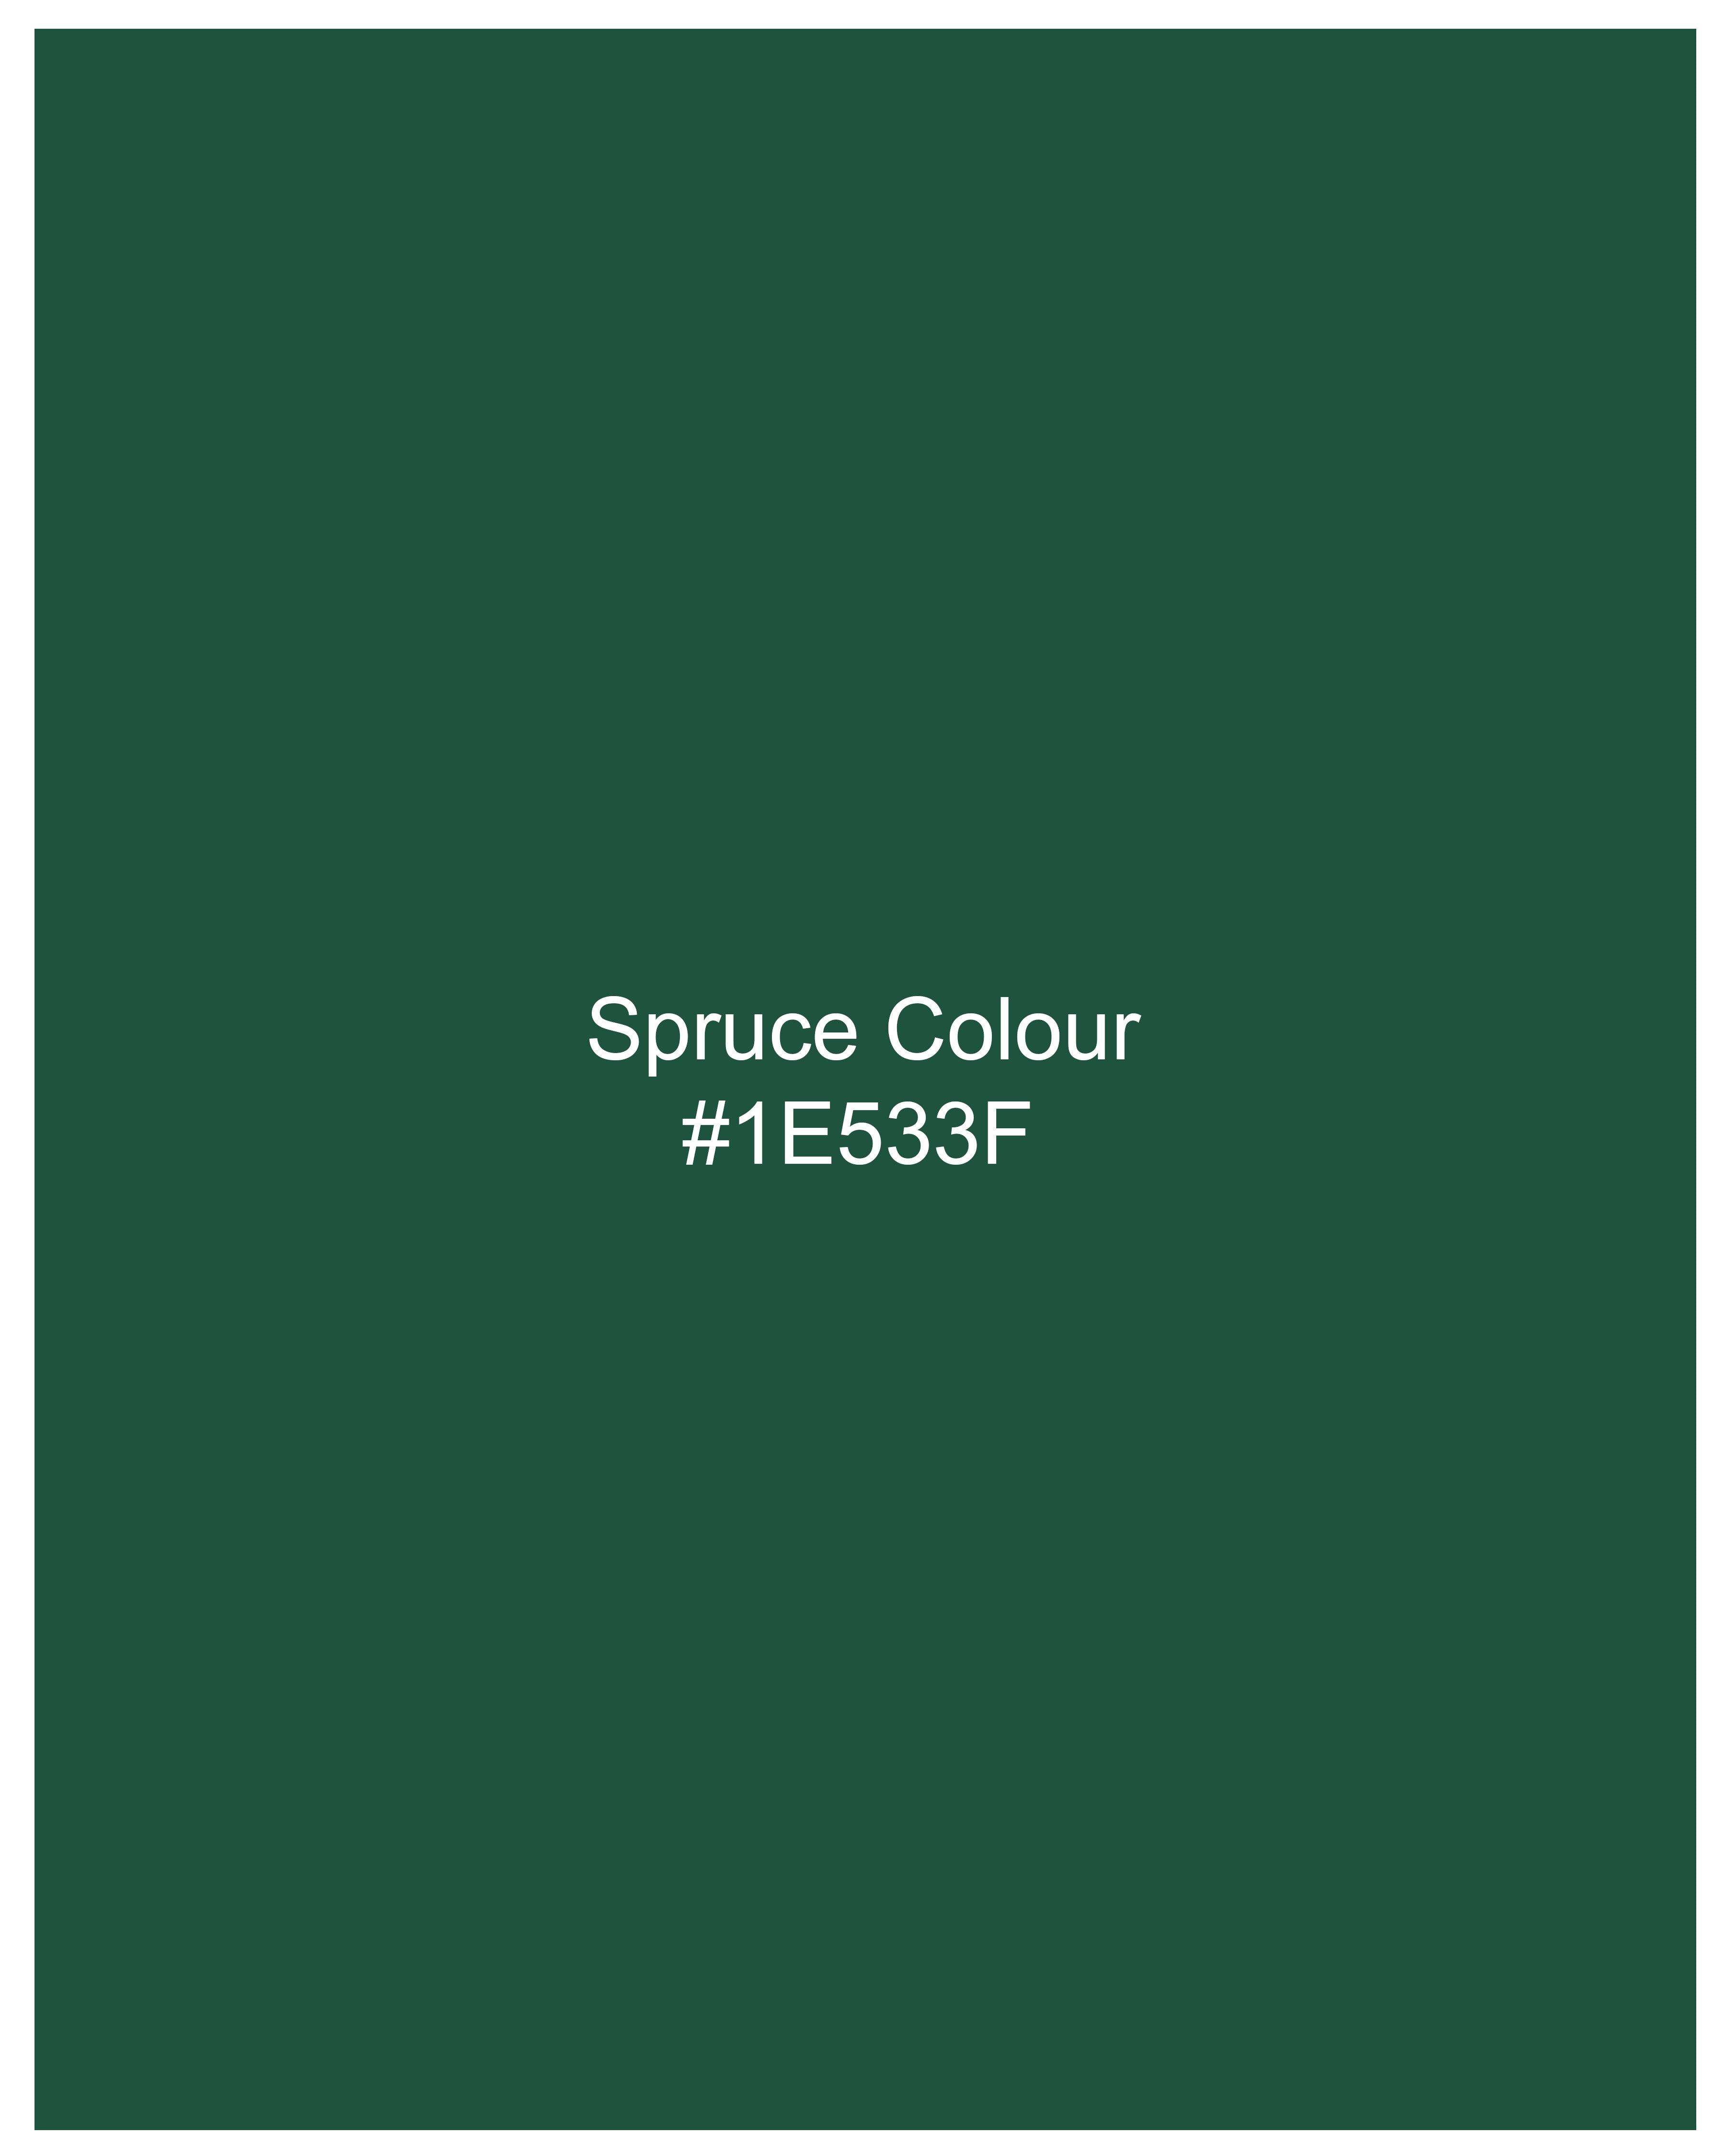 Spruce Green Rinse Wash  Clean Look Denim Shorts SR222-28, SR222-30, SR222-32, SR222-34, SR222-36, SR222-38, SR222-40, SR222-42, SR222-44